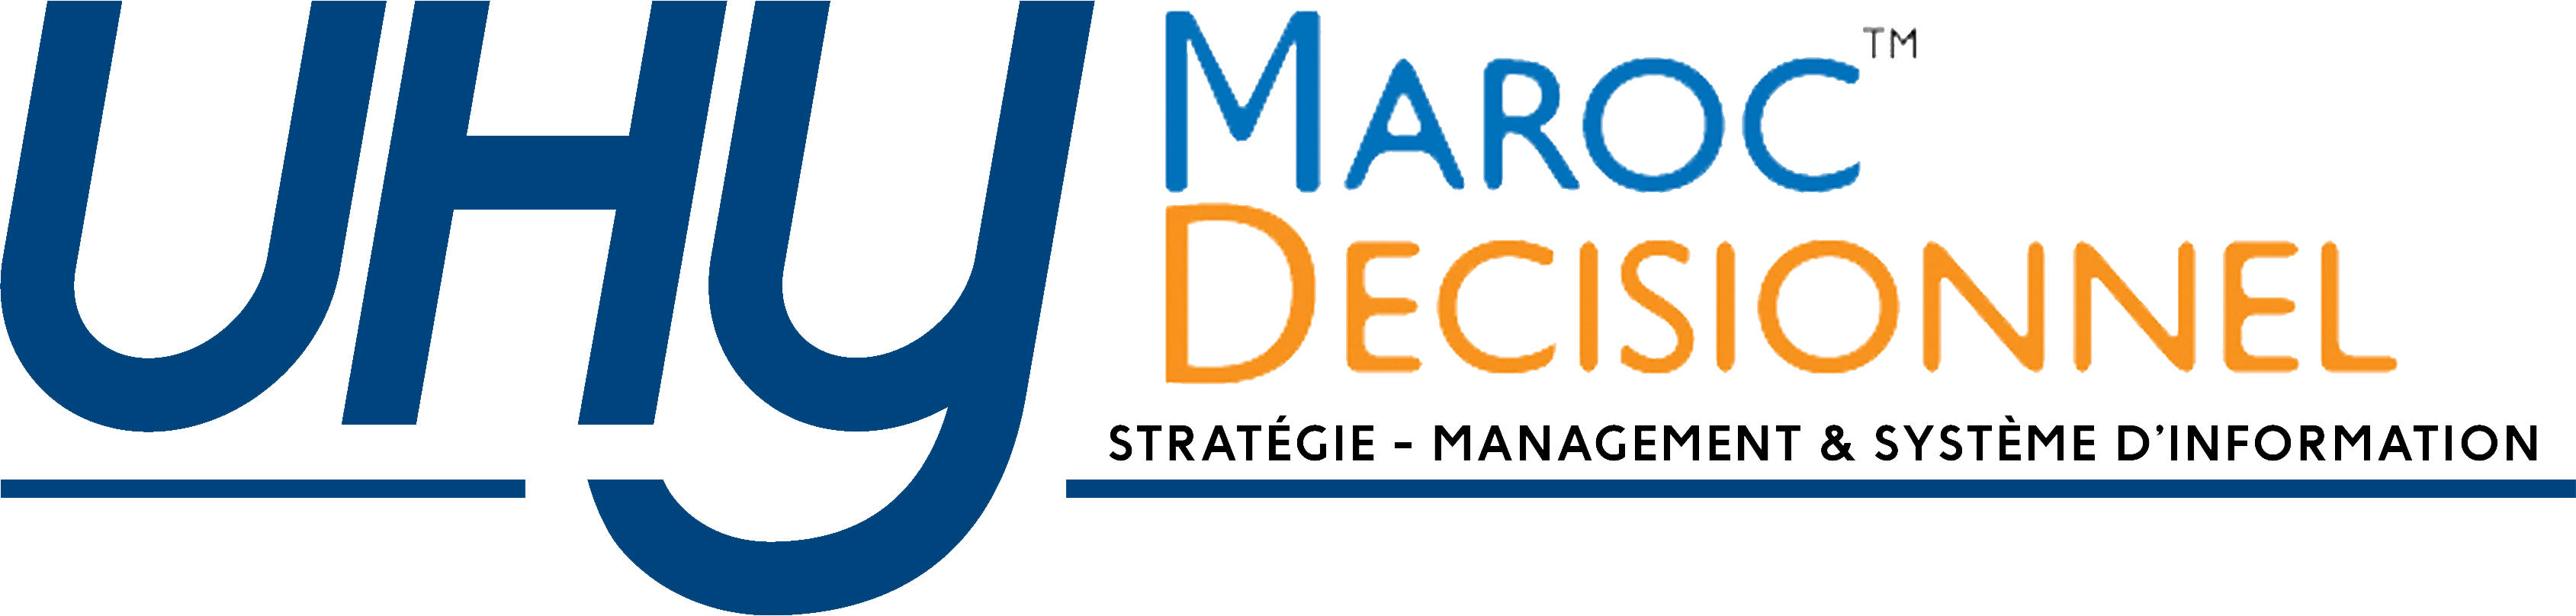 Logo de Maroc decisionnel